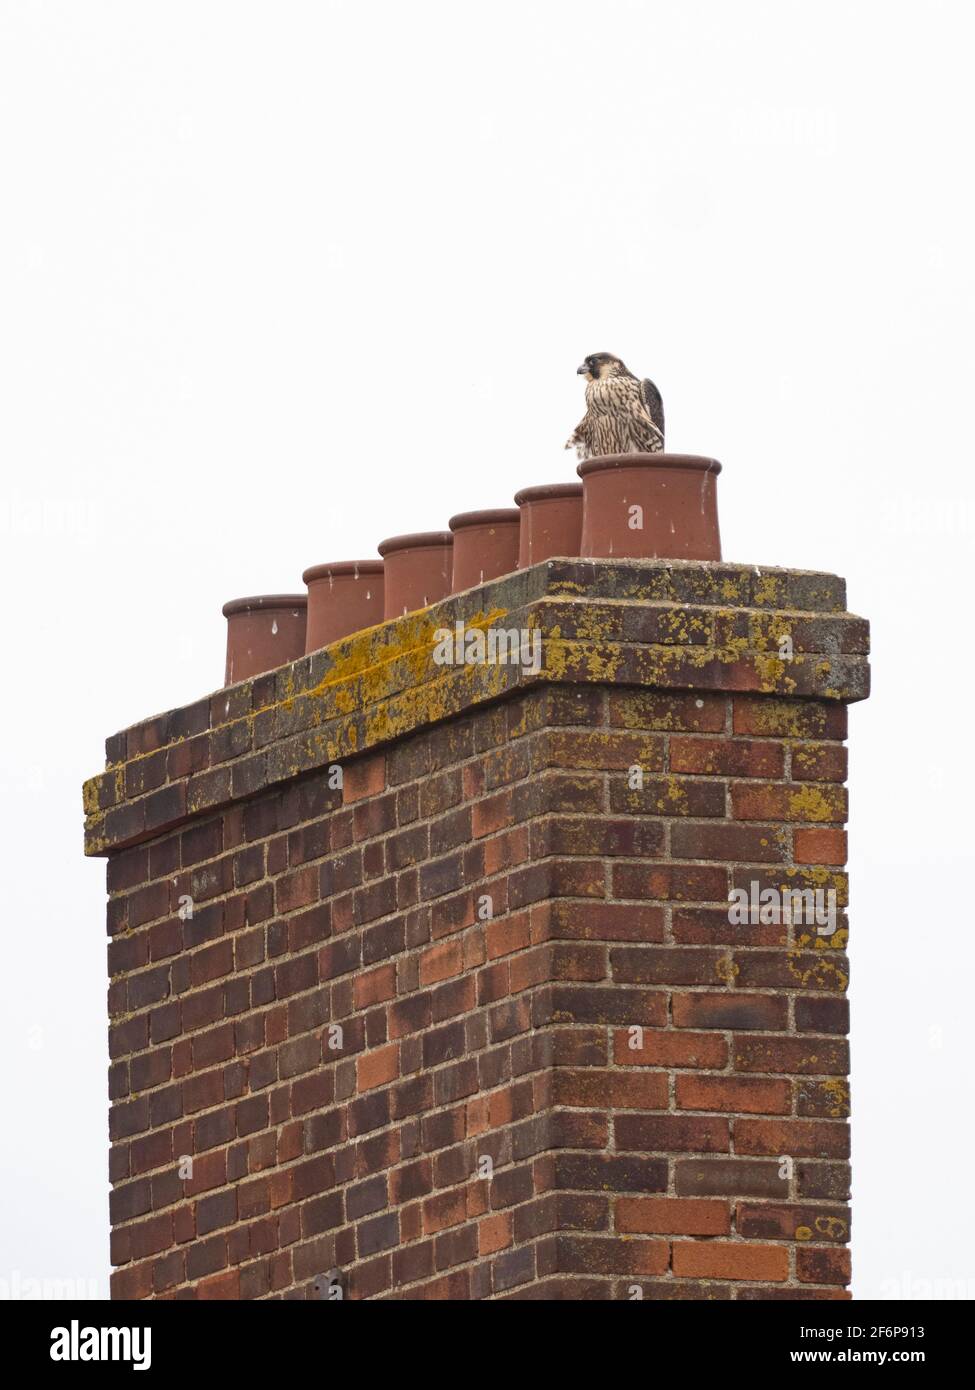 Peregrine Falcon, Falco peregrinus, fledged young around Cromer Church, North Norfolk, summer Stock Photo